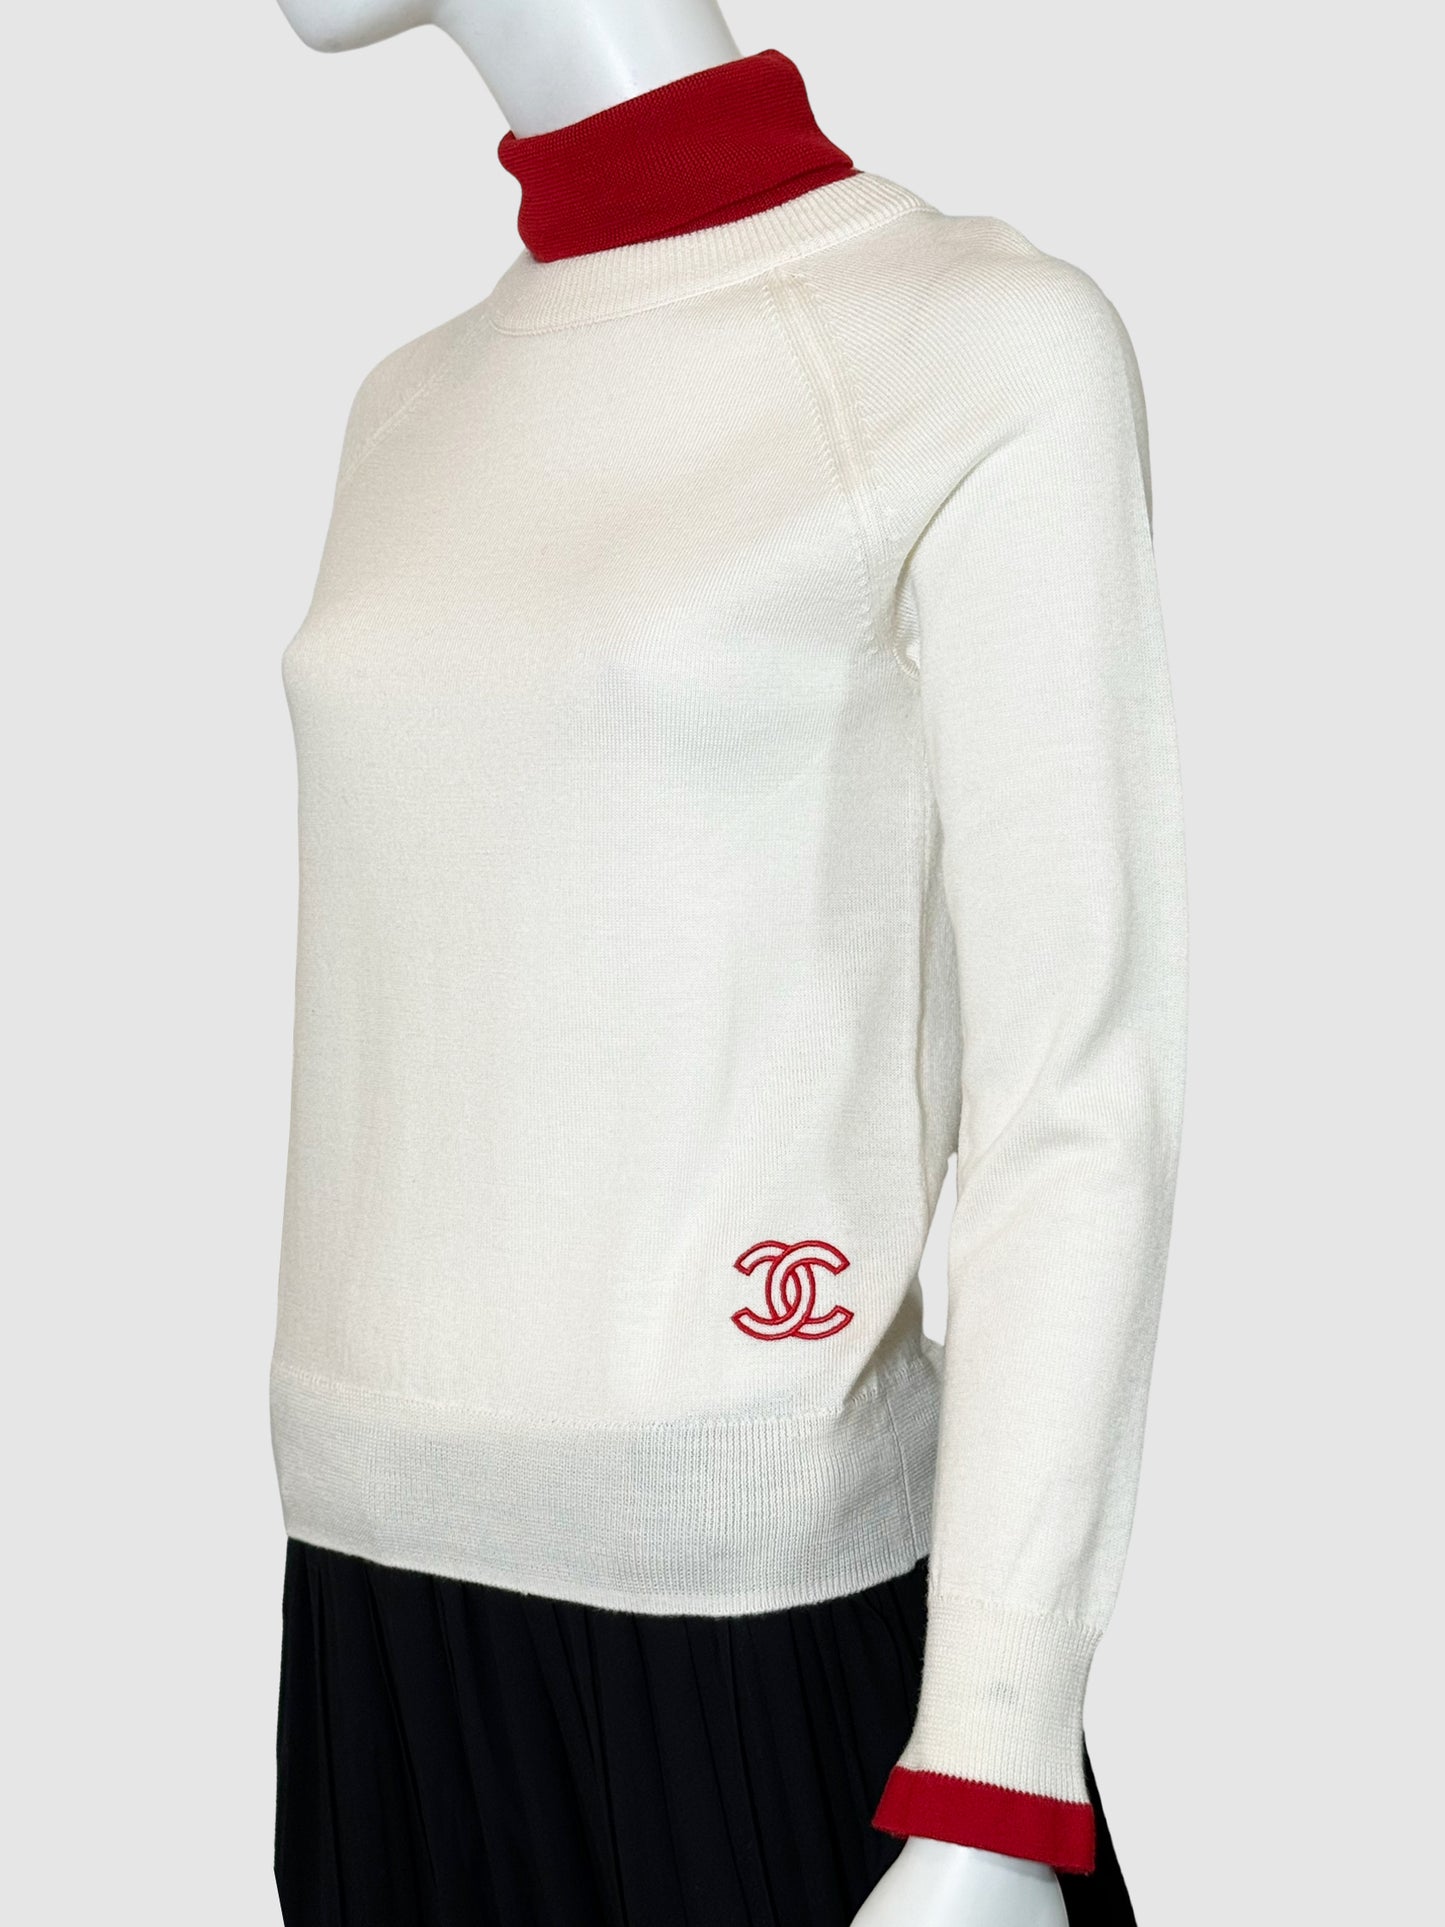 Wool Turtleneck Sweater - Size M